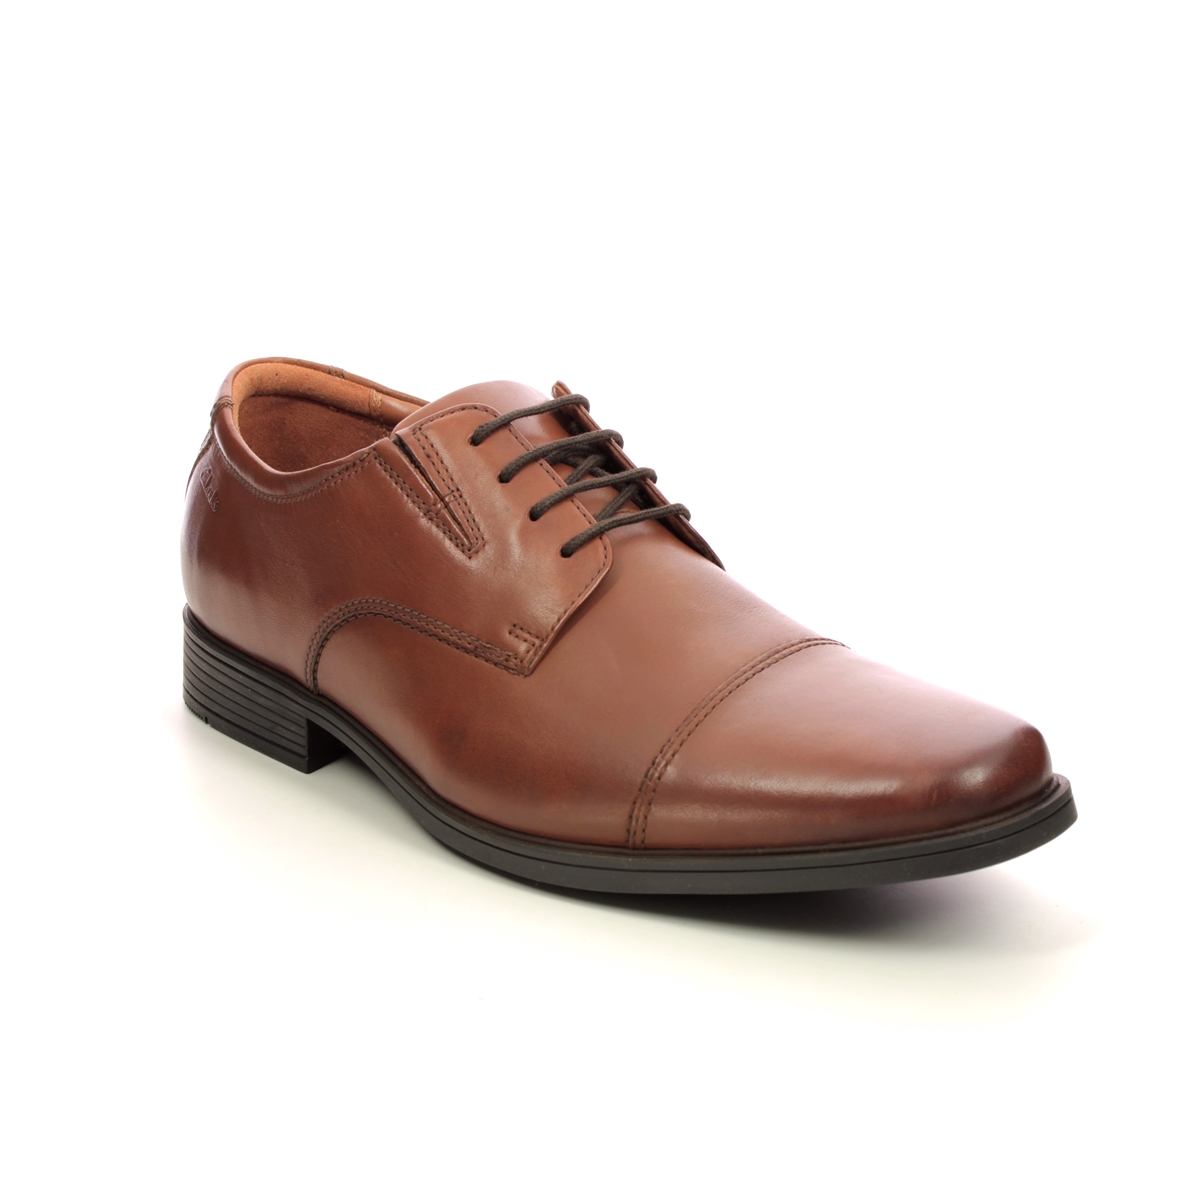 Clarks Tilden Cap Dark Tan Mens Formal Shoes 300968H In Size 9 In Plain Dark Tan H Width Fitting Extra Wide